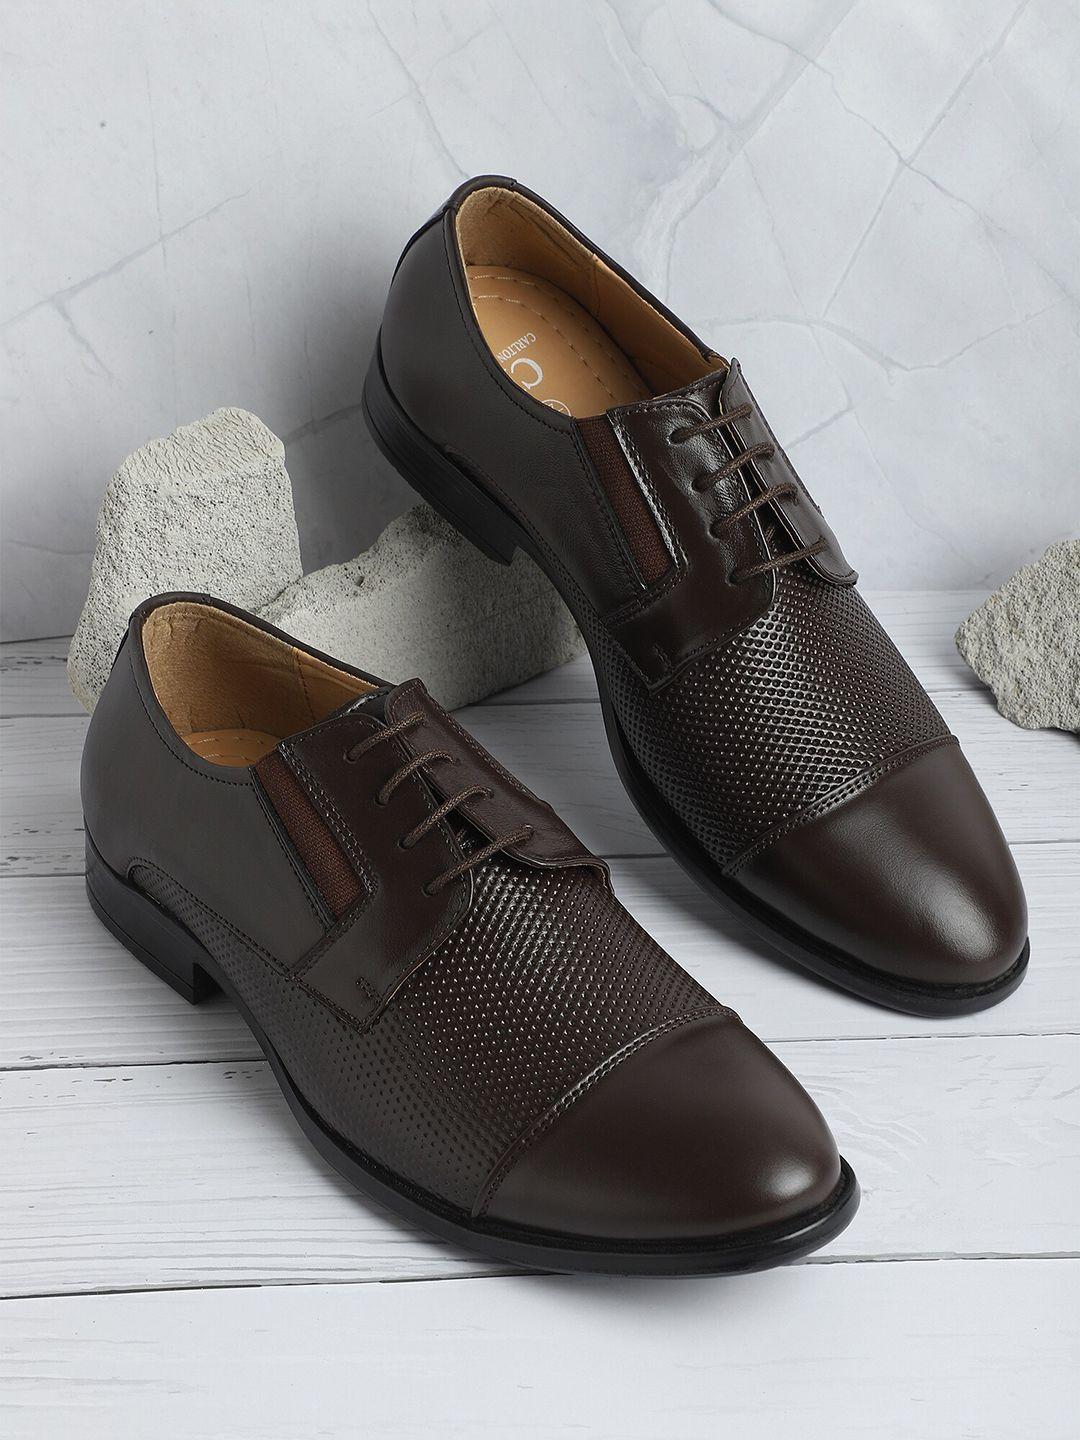 carlton-london-men-textured-detailed-leather-formal-derbys